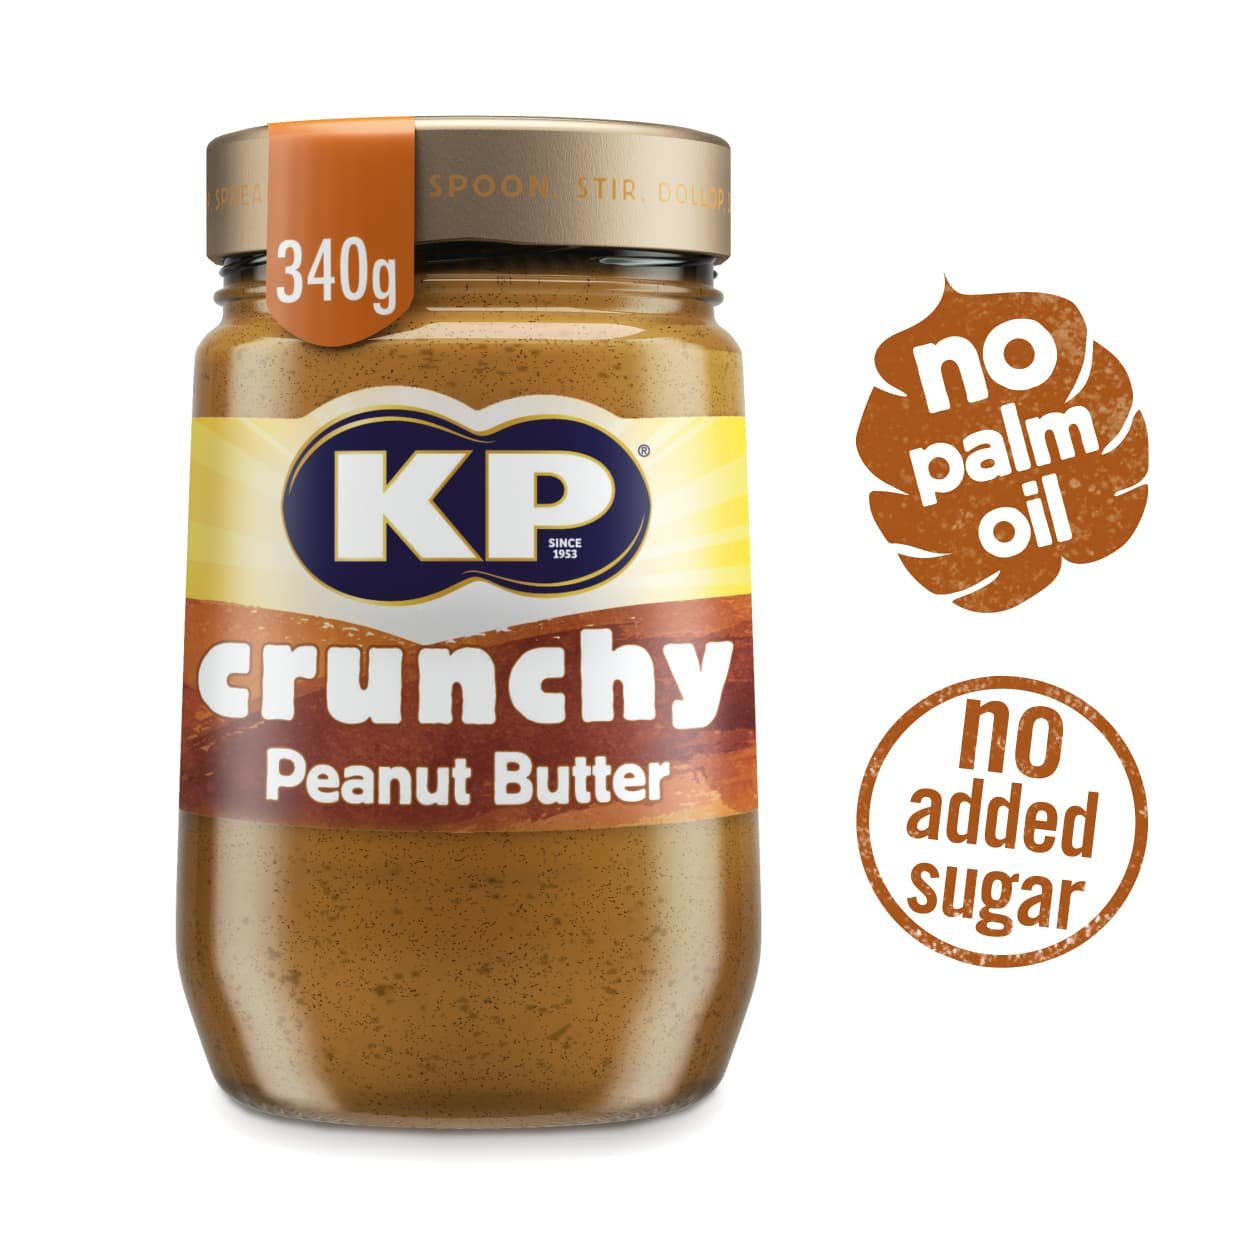 KP_Peanut_Butter_Crunchy_ Optimised_CGI_Render_alt.jpg